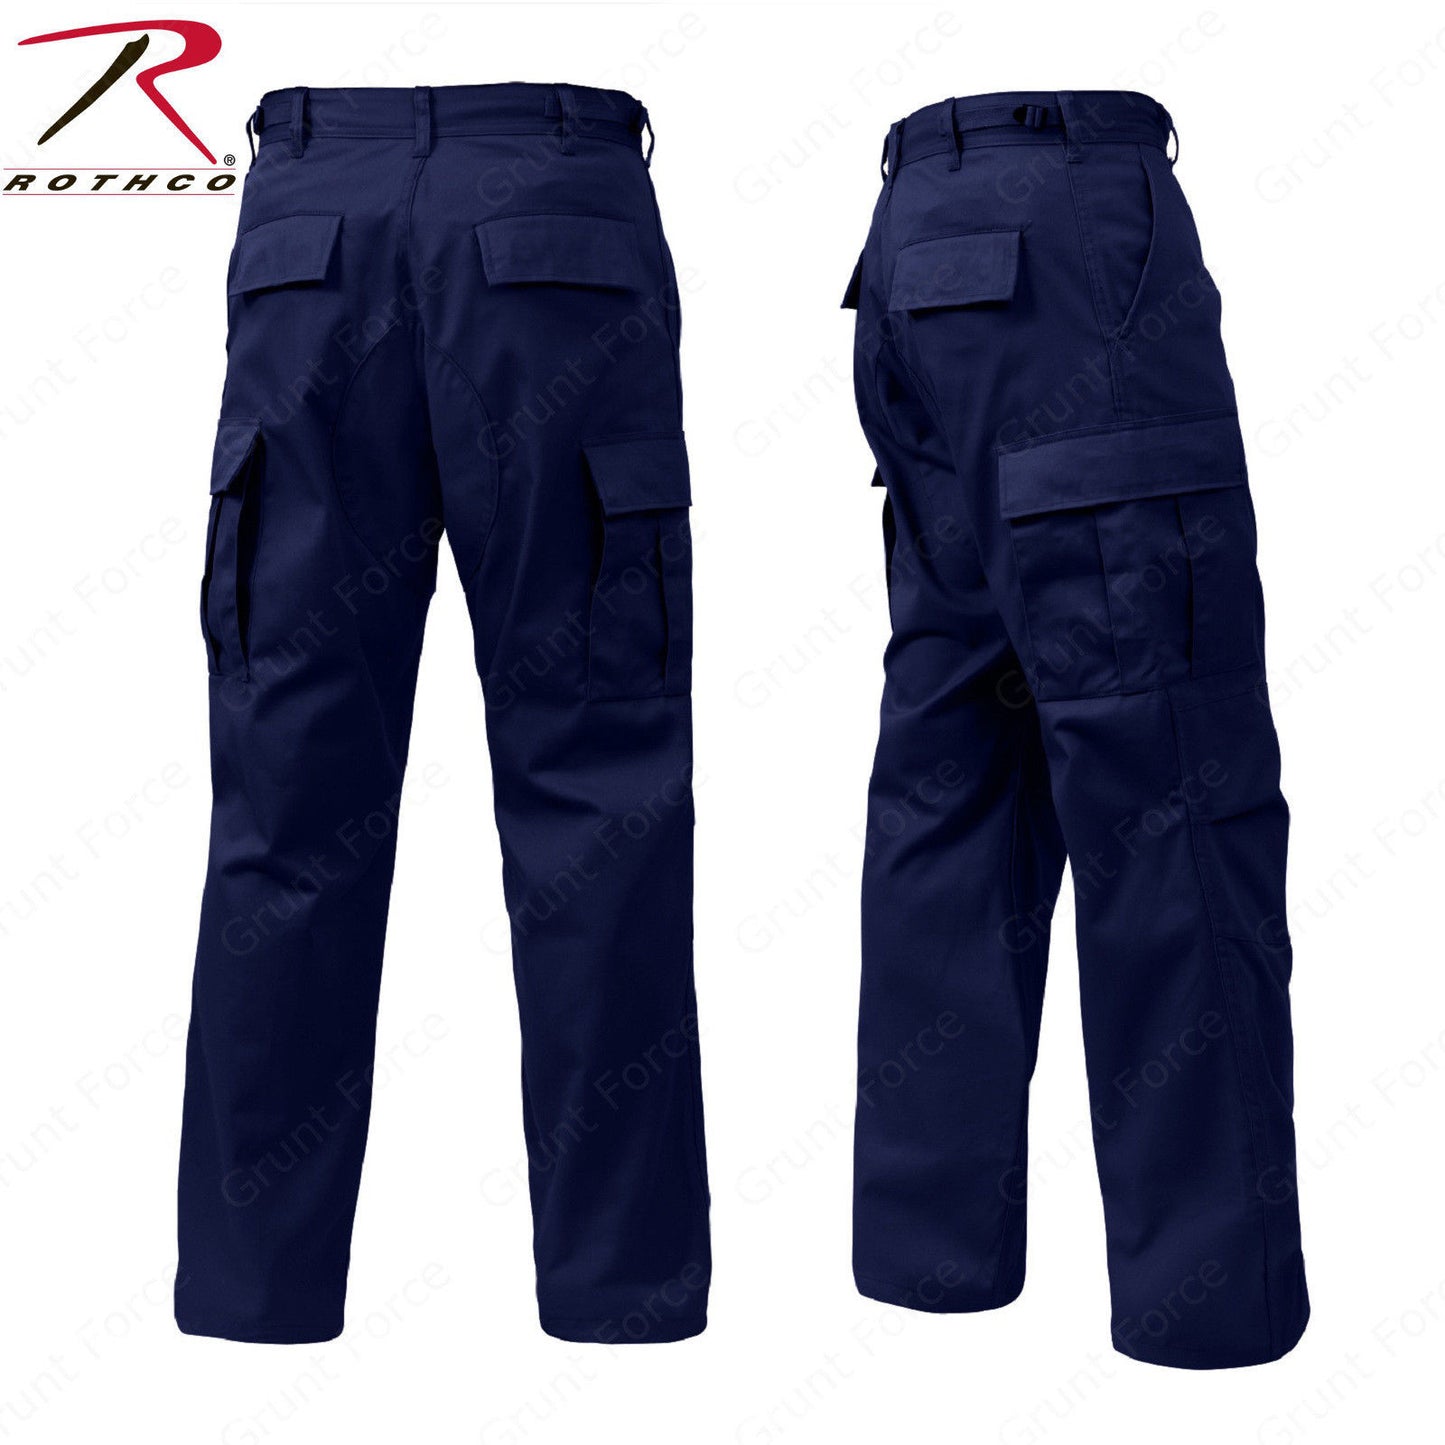 Rothco Men's Midnite Navy Blue BDU Pants - 6 Pocket Uniform Pant